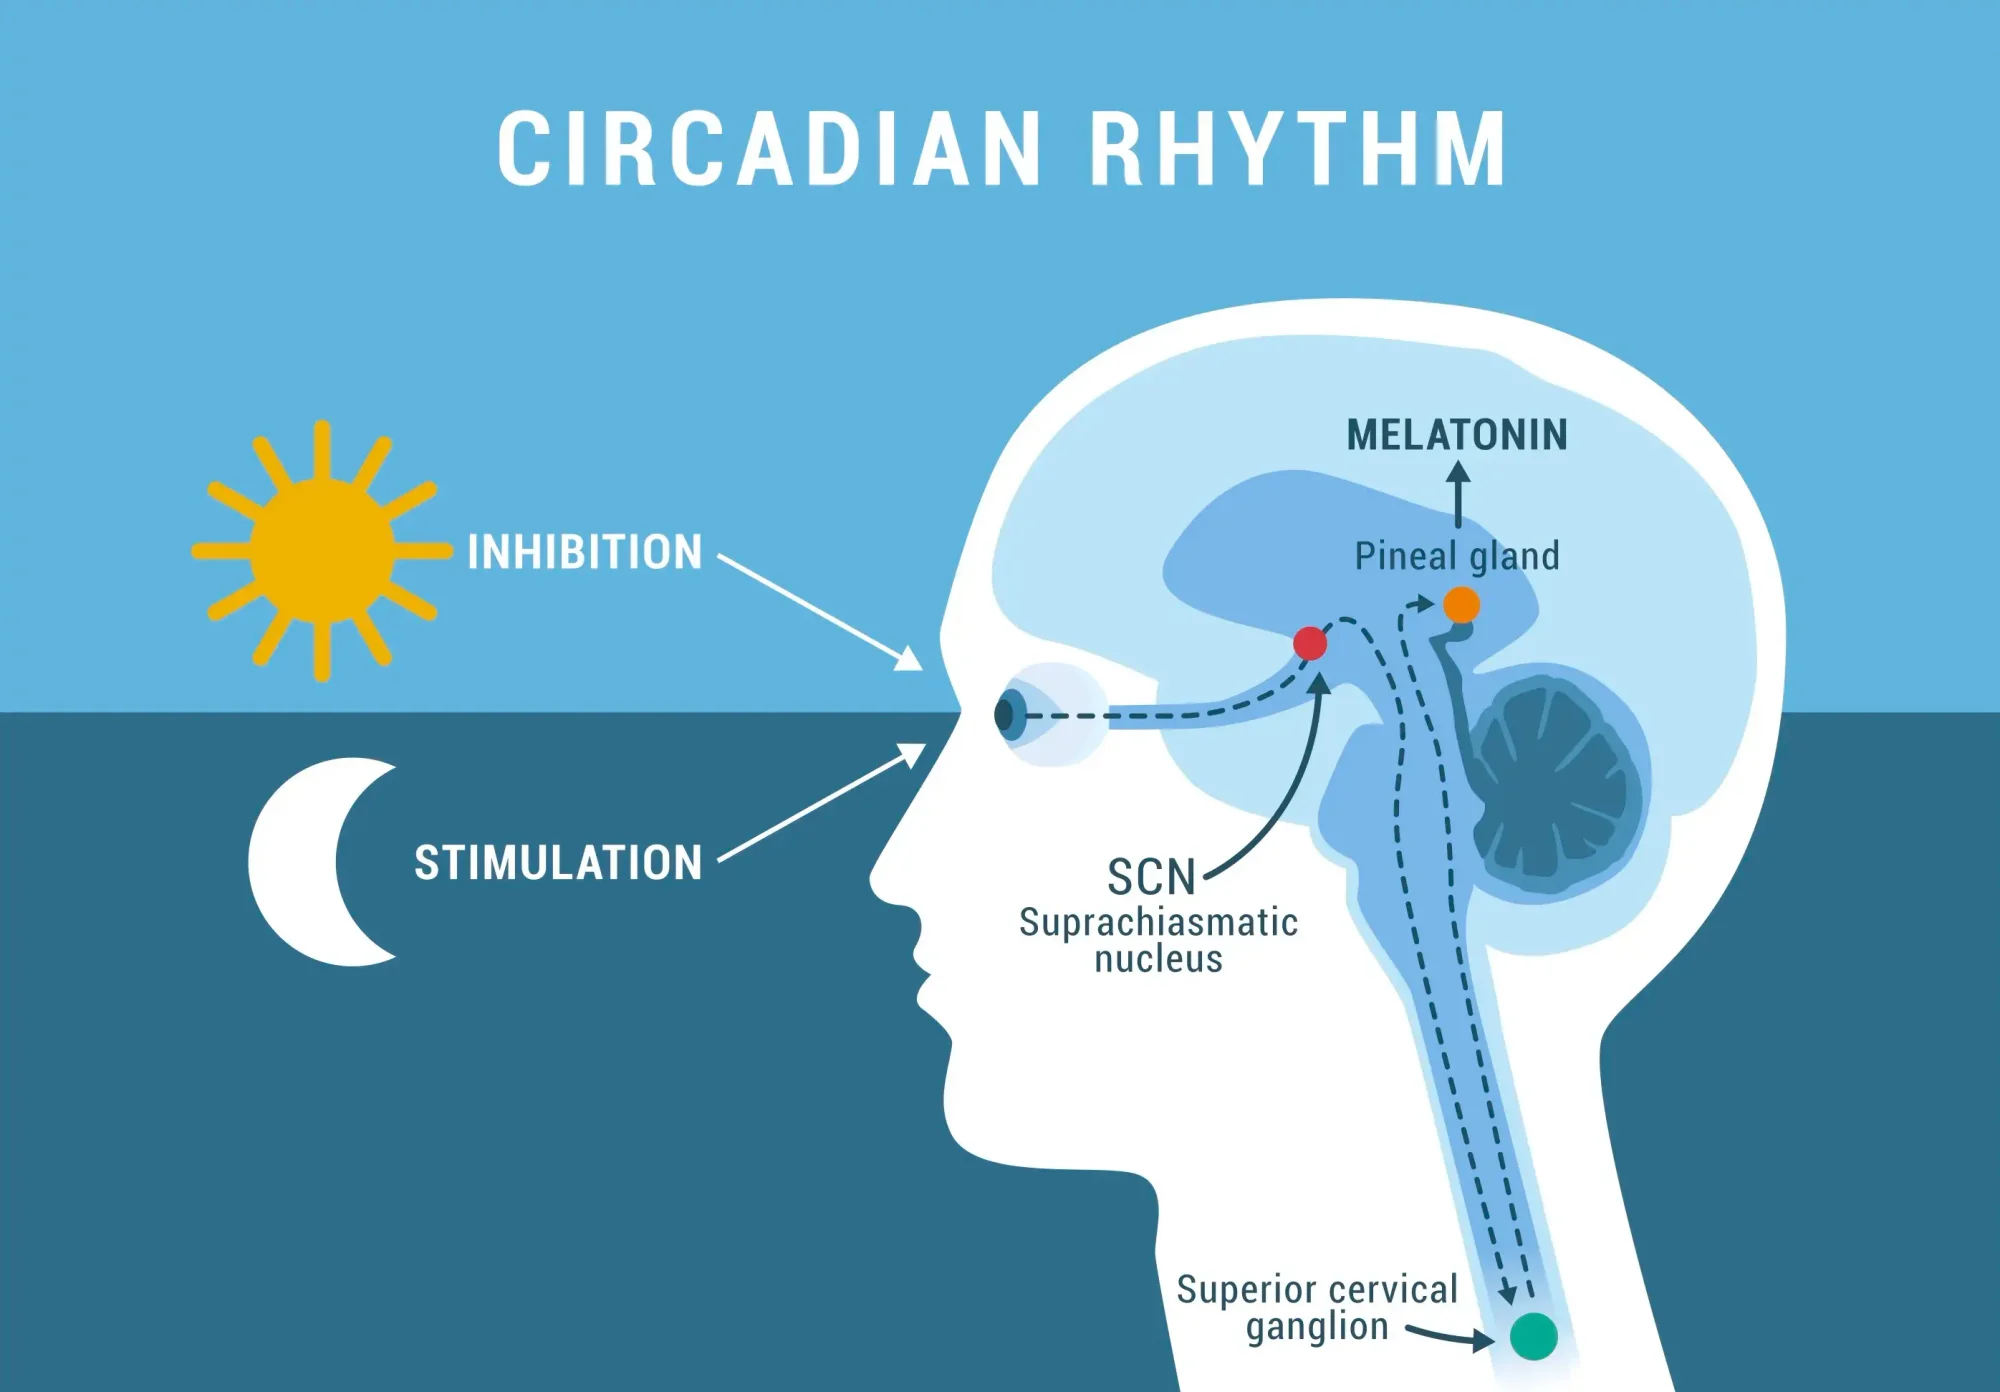 Animated graphic explaining the Circadian Rhythm. Inhibition of melatonin in the daytime. Stimulation of melatonin in the nighttime.